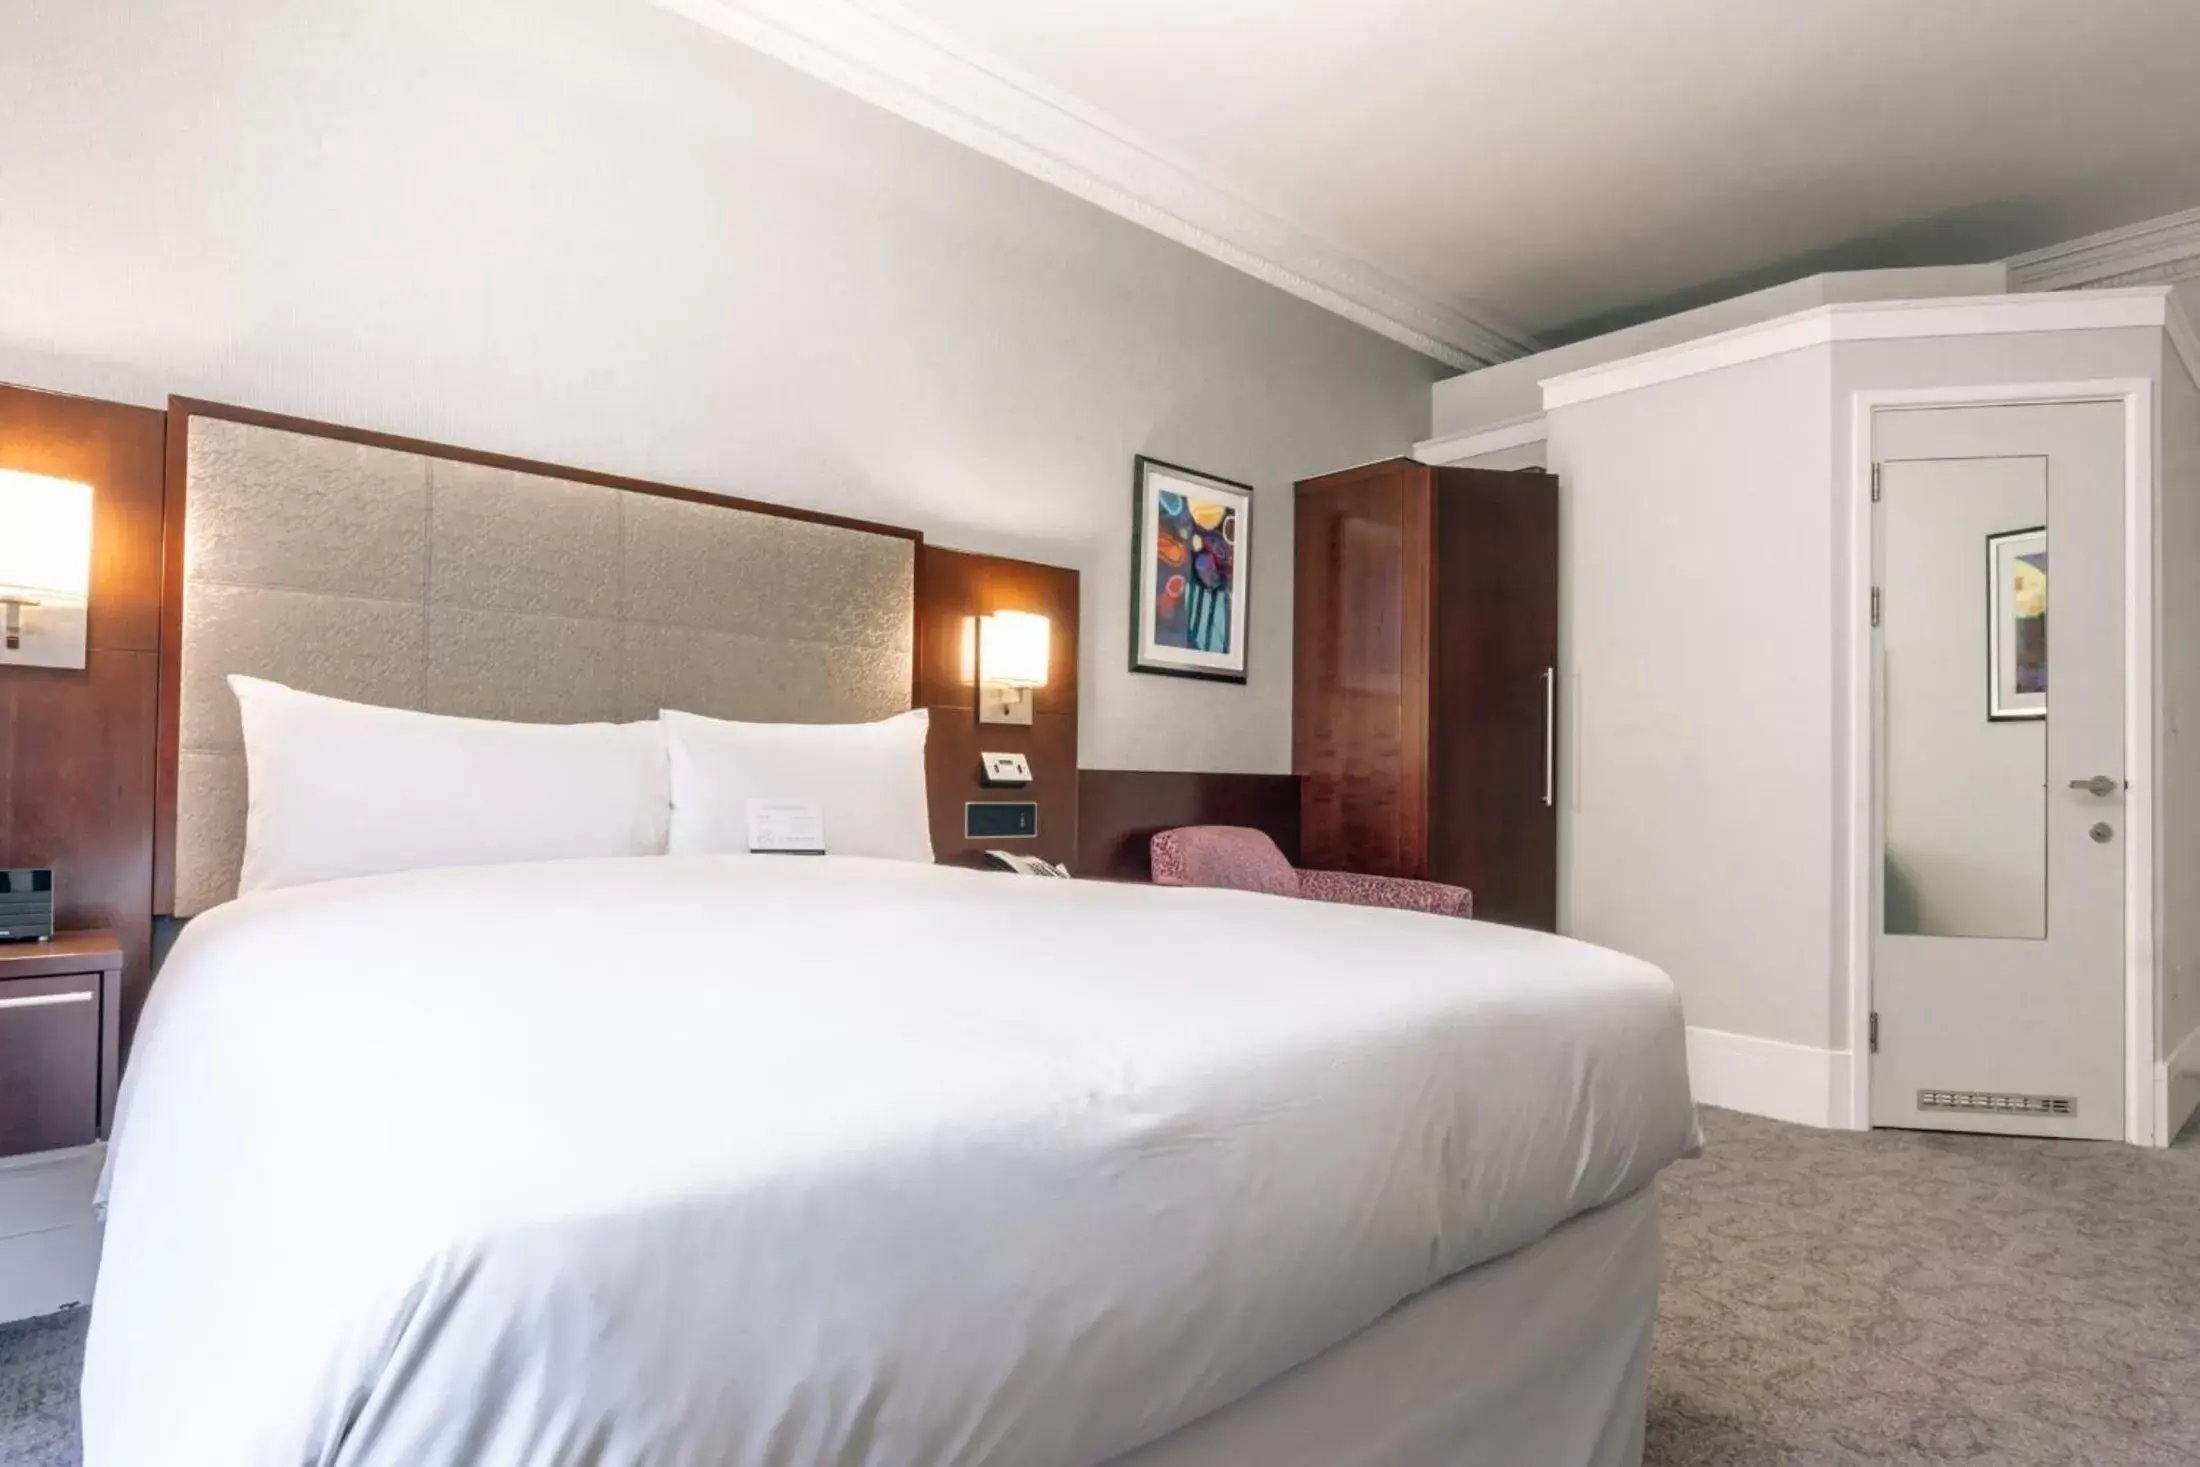 Bed in Club Quarters Hotel Trafalgar Square, London